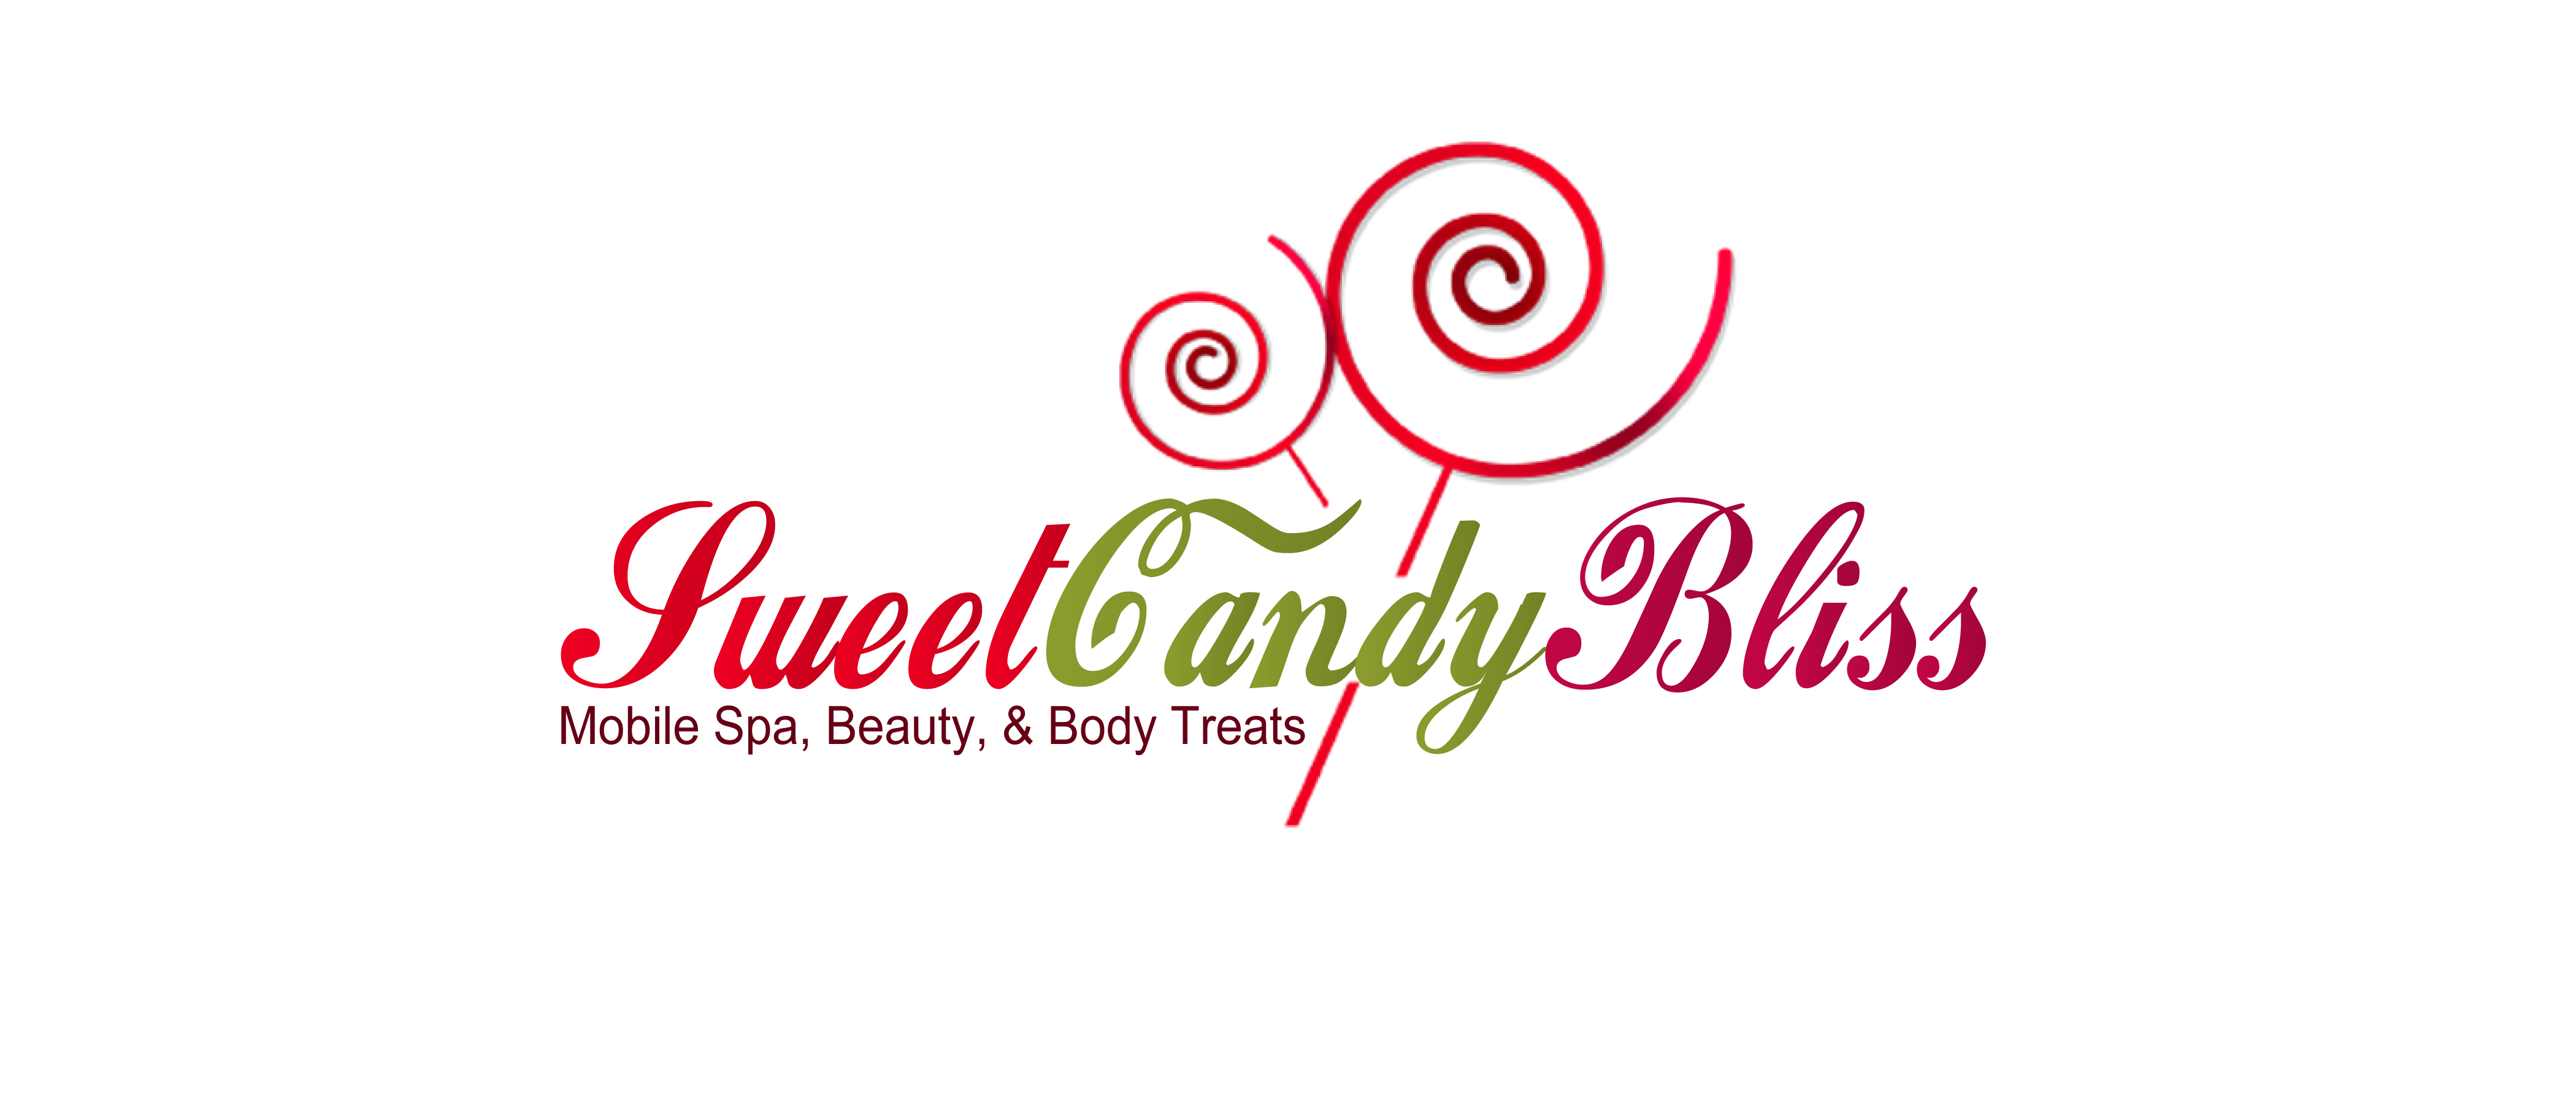 Sweet Candy Bliss Logo